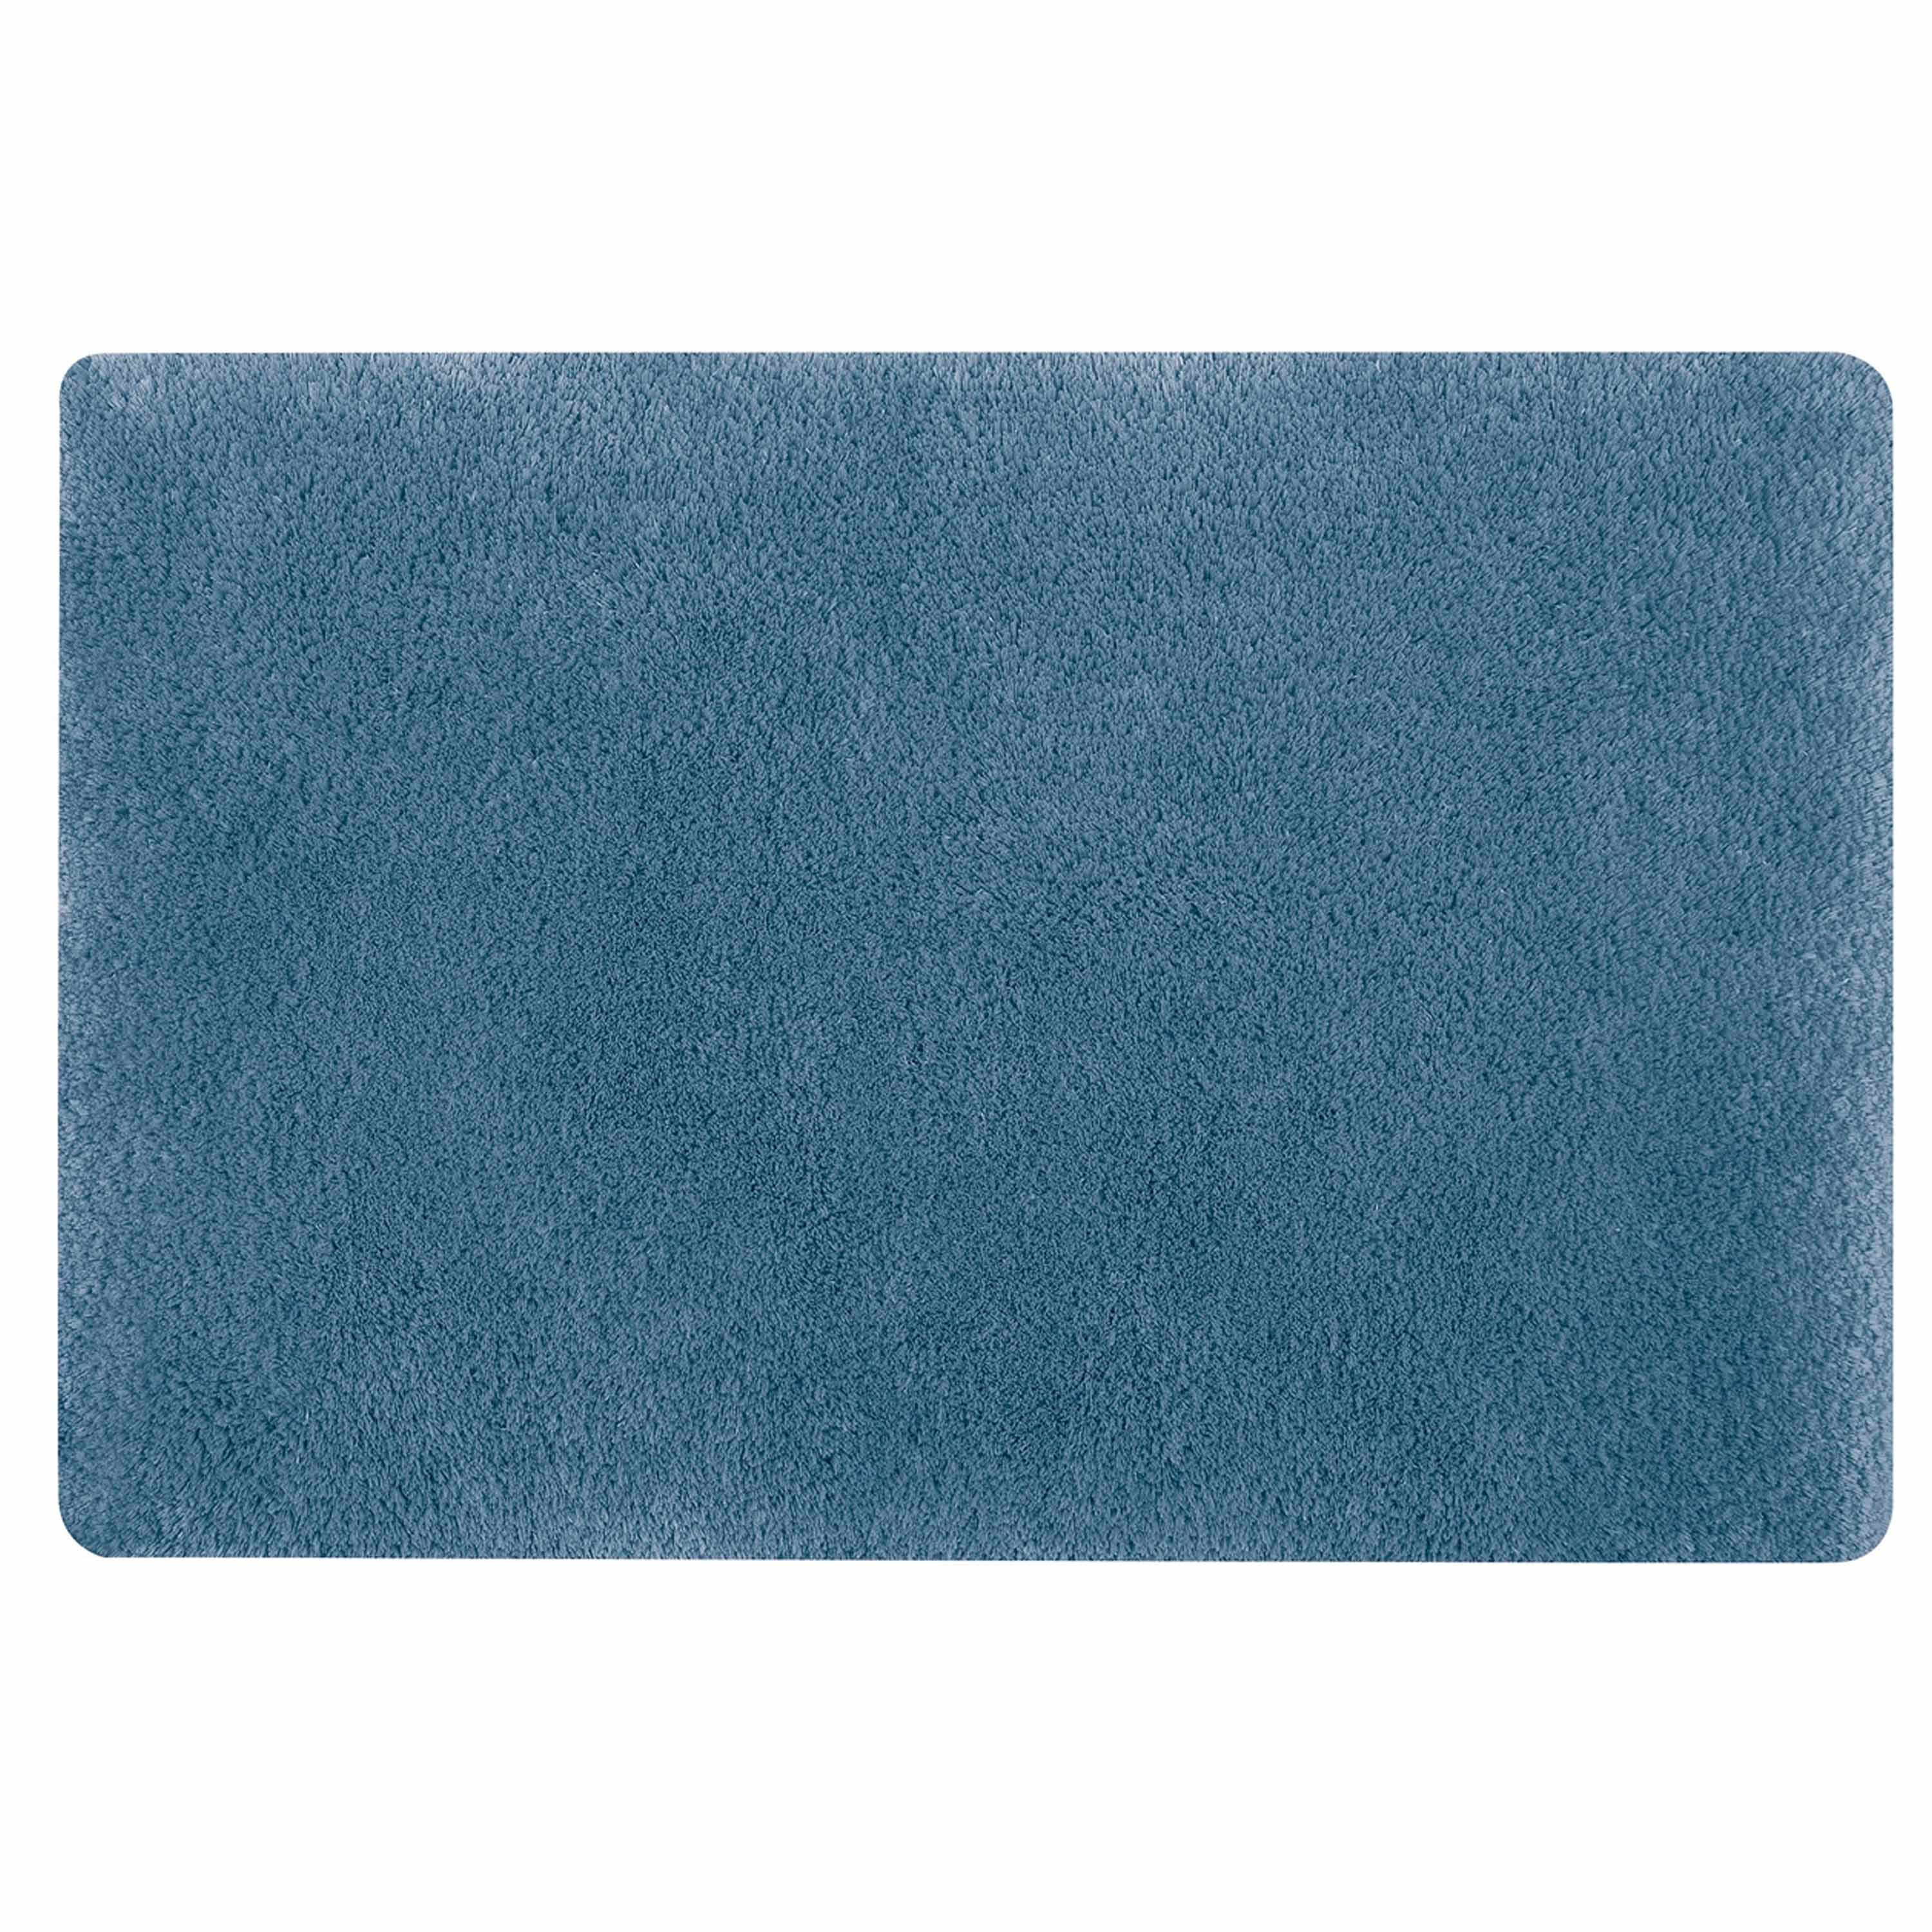 Badmat, badmat, douchemat, Fino, superzacht, hoogPIN, wasbaar, antislip, badmat, 40 x 60 cm, blauw-wit